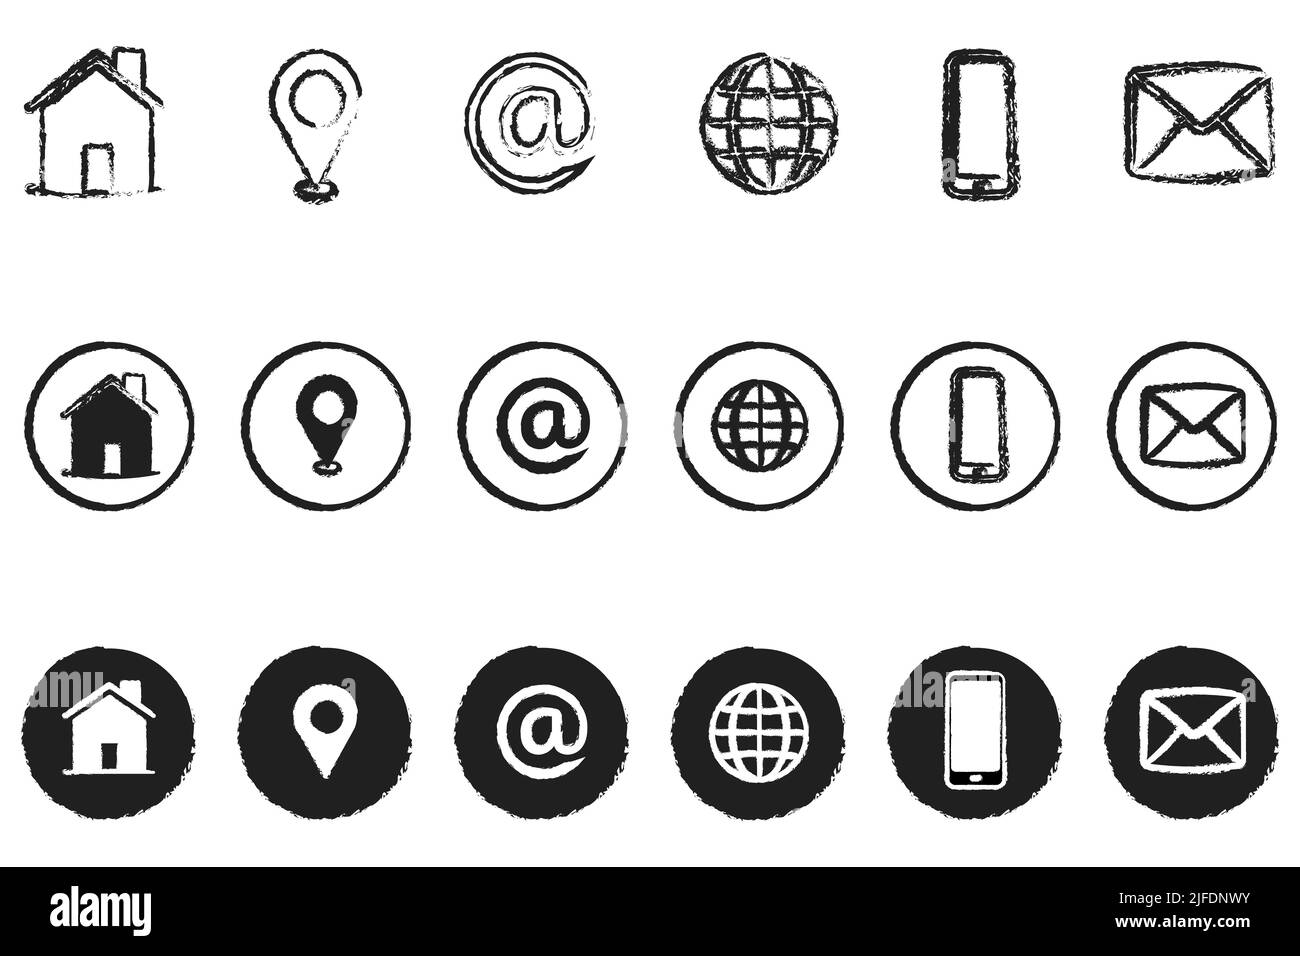 Grunge Stil Kontakt Icon Set. Schaltfläche Kommunikationsset. Vektorgrafik Stock Vektor